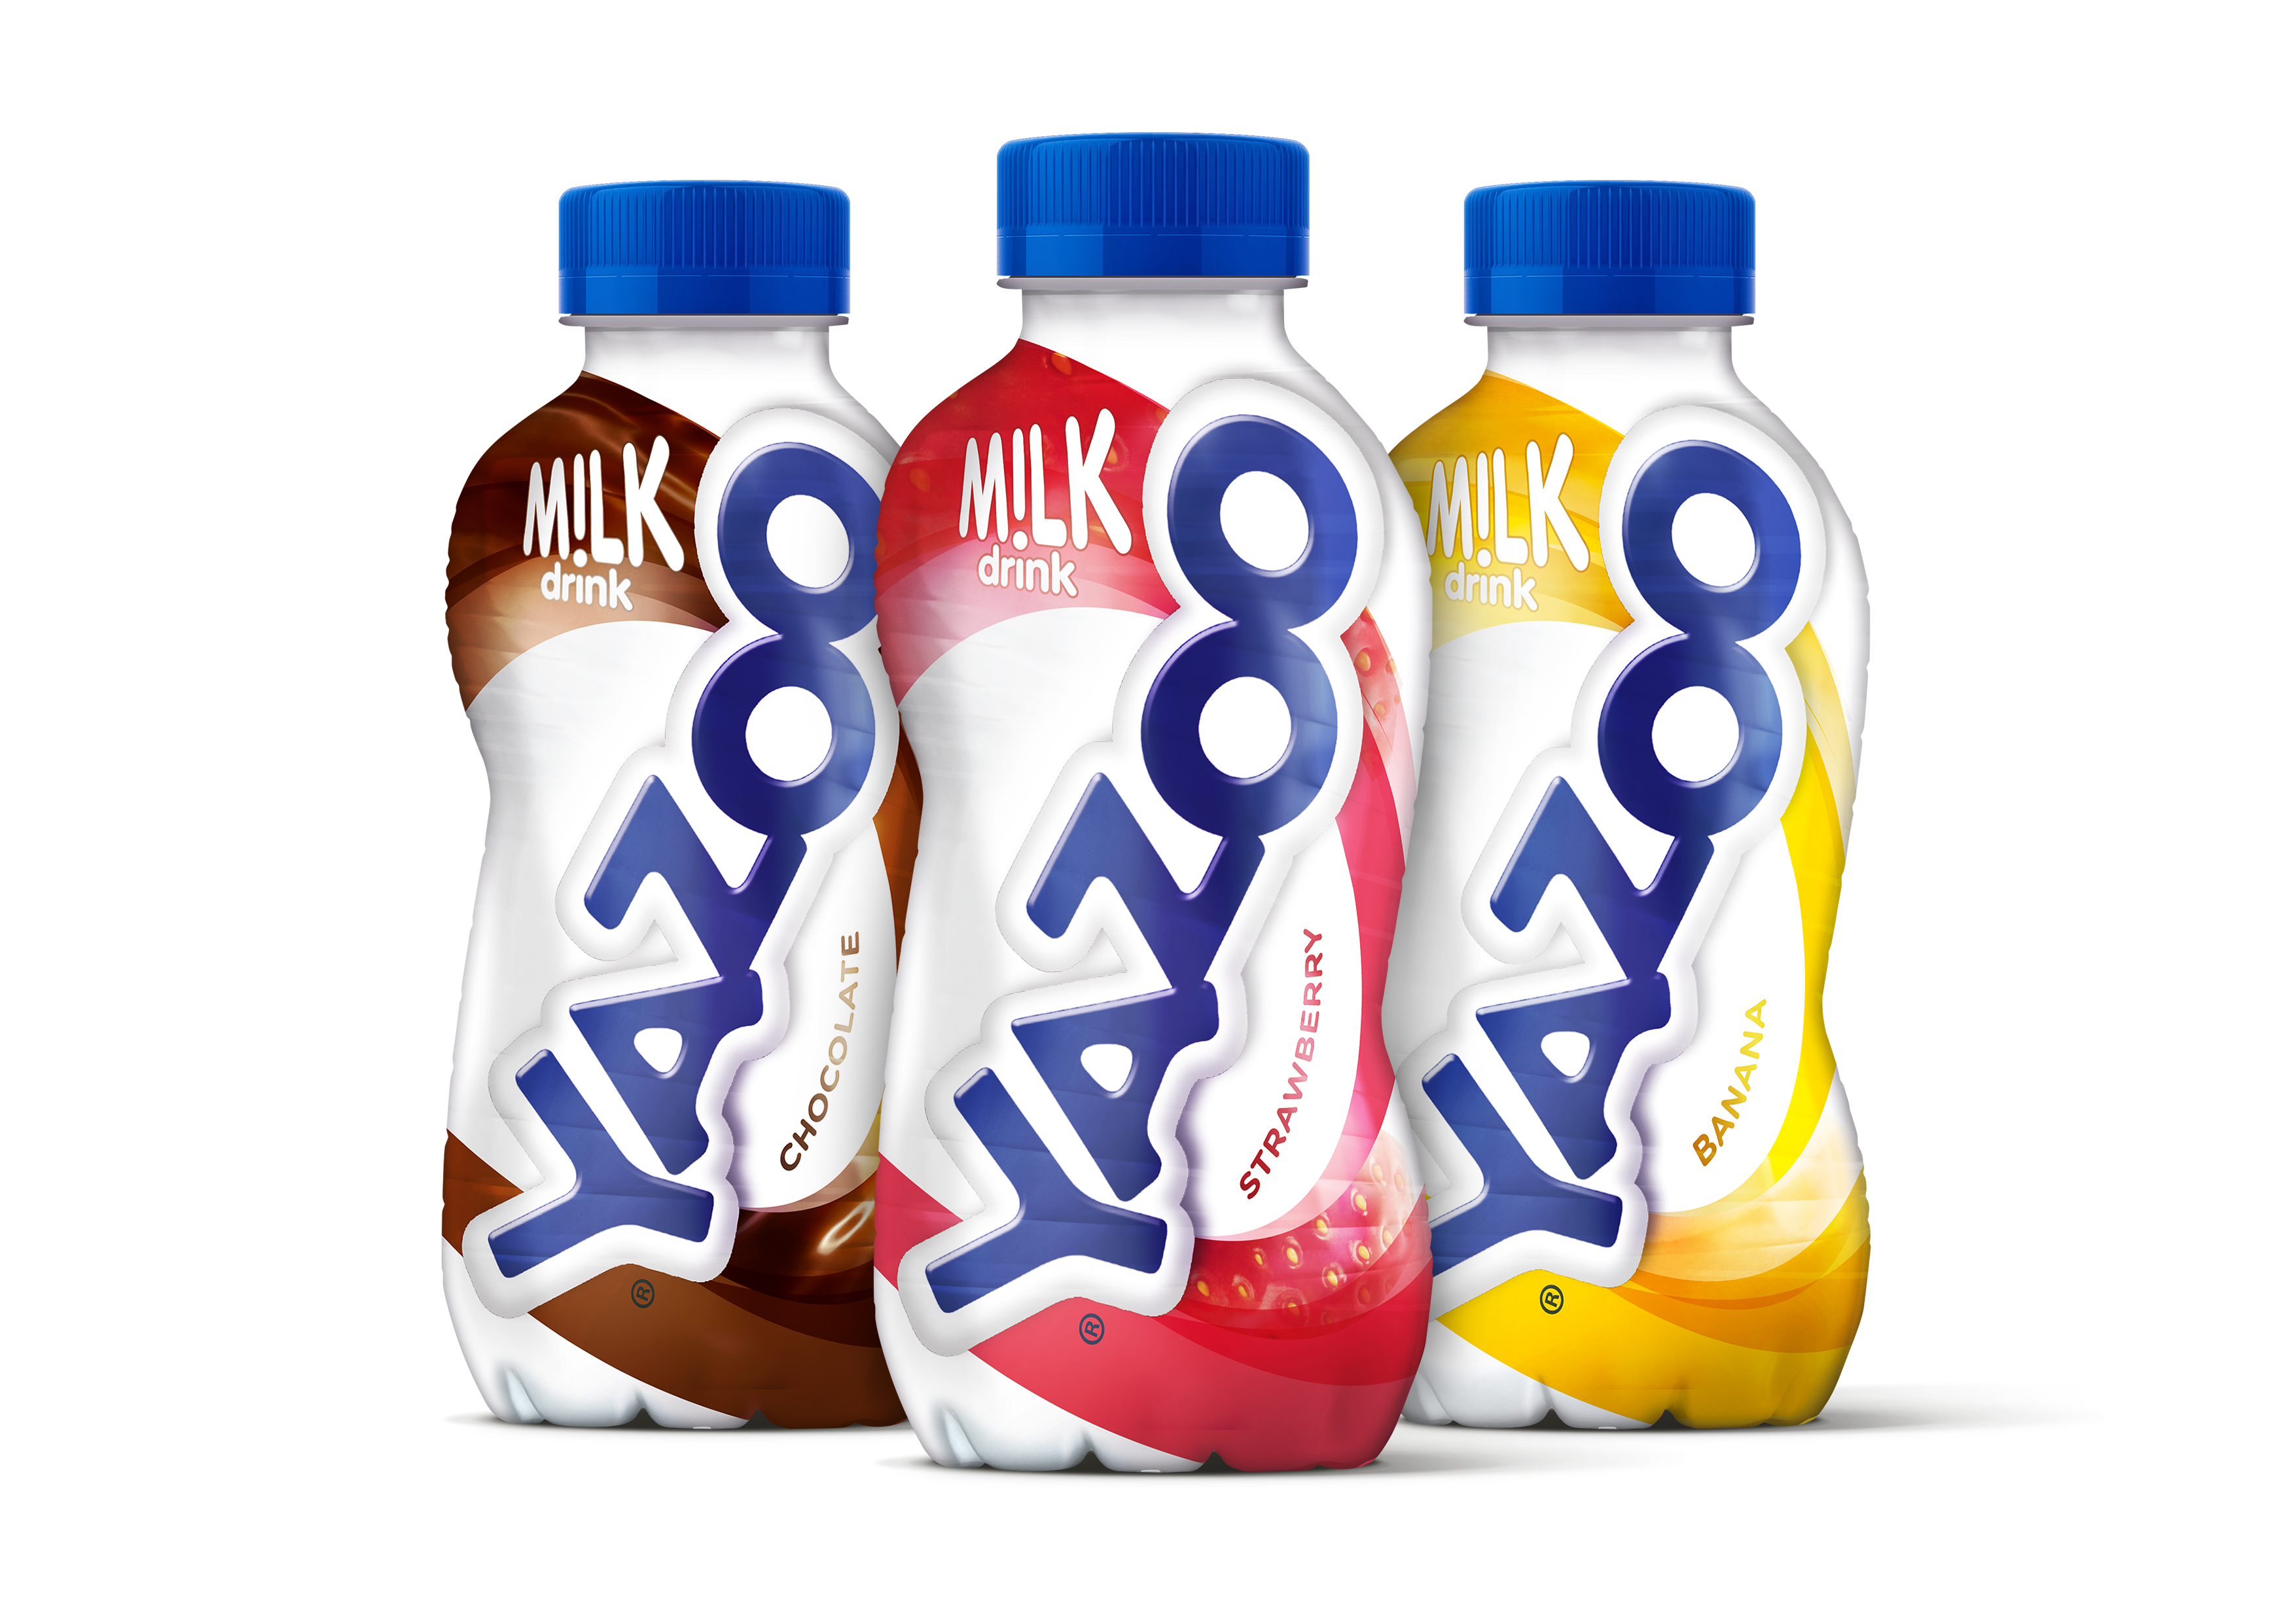 YAZOO moves to 100% rPET bottles ahead of schedule